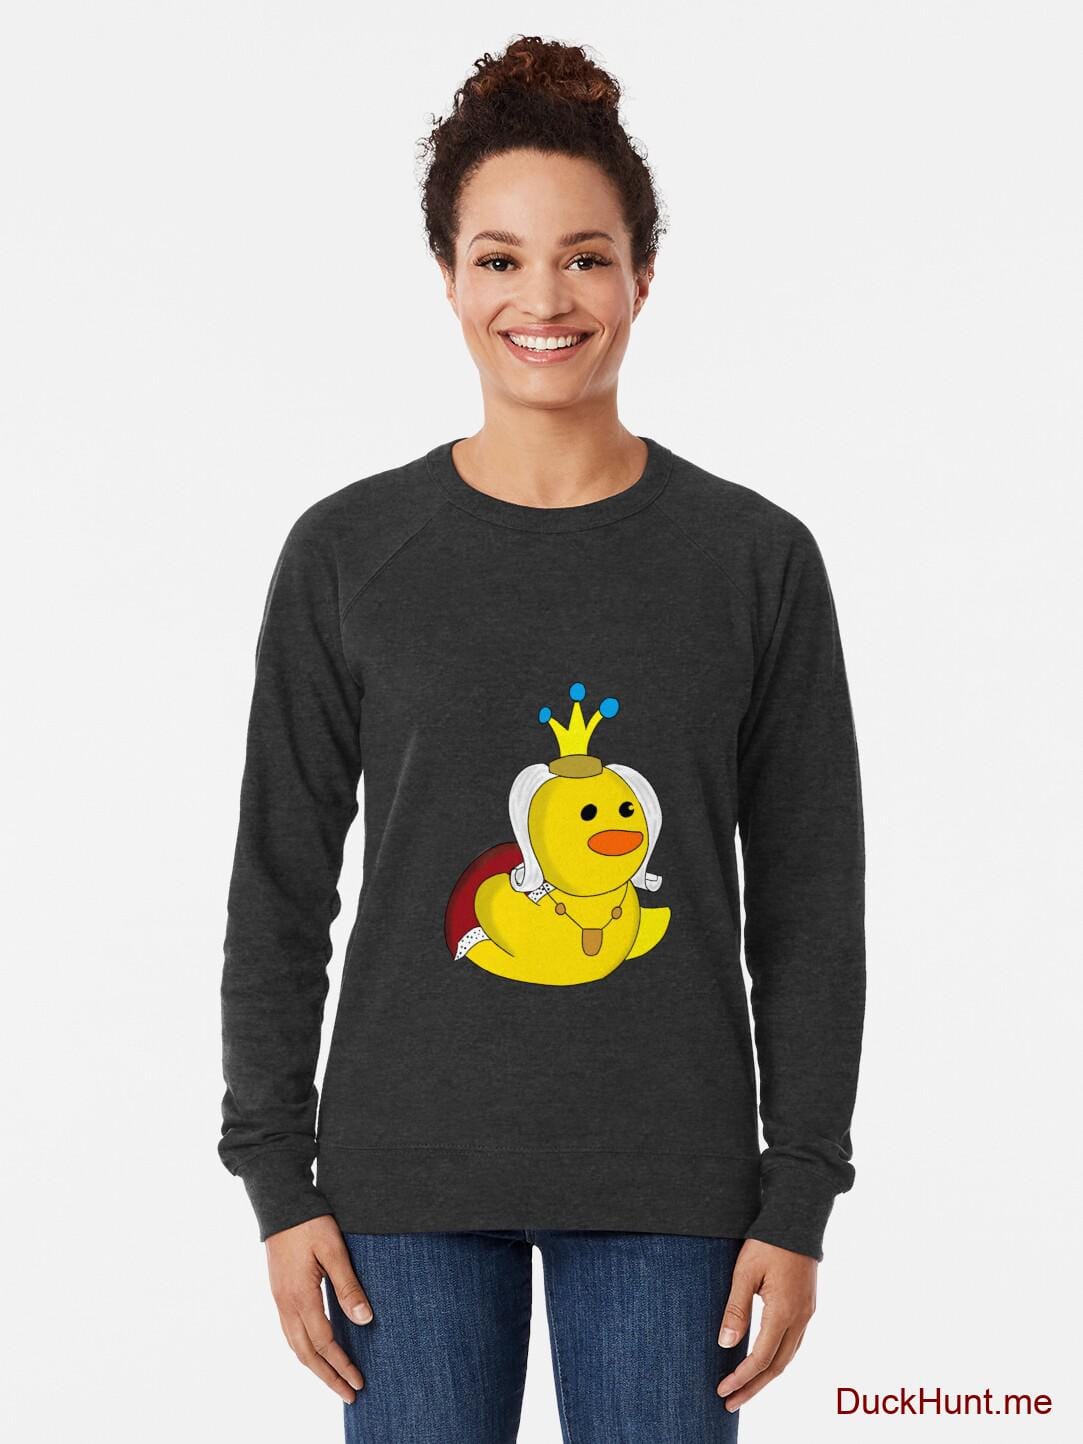 Royal Duck Charcoal Lightweight Sweatshirt alternative image 1